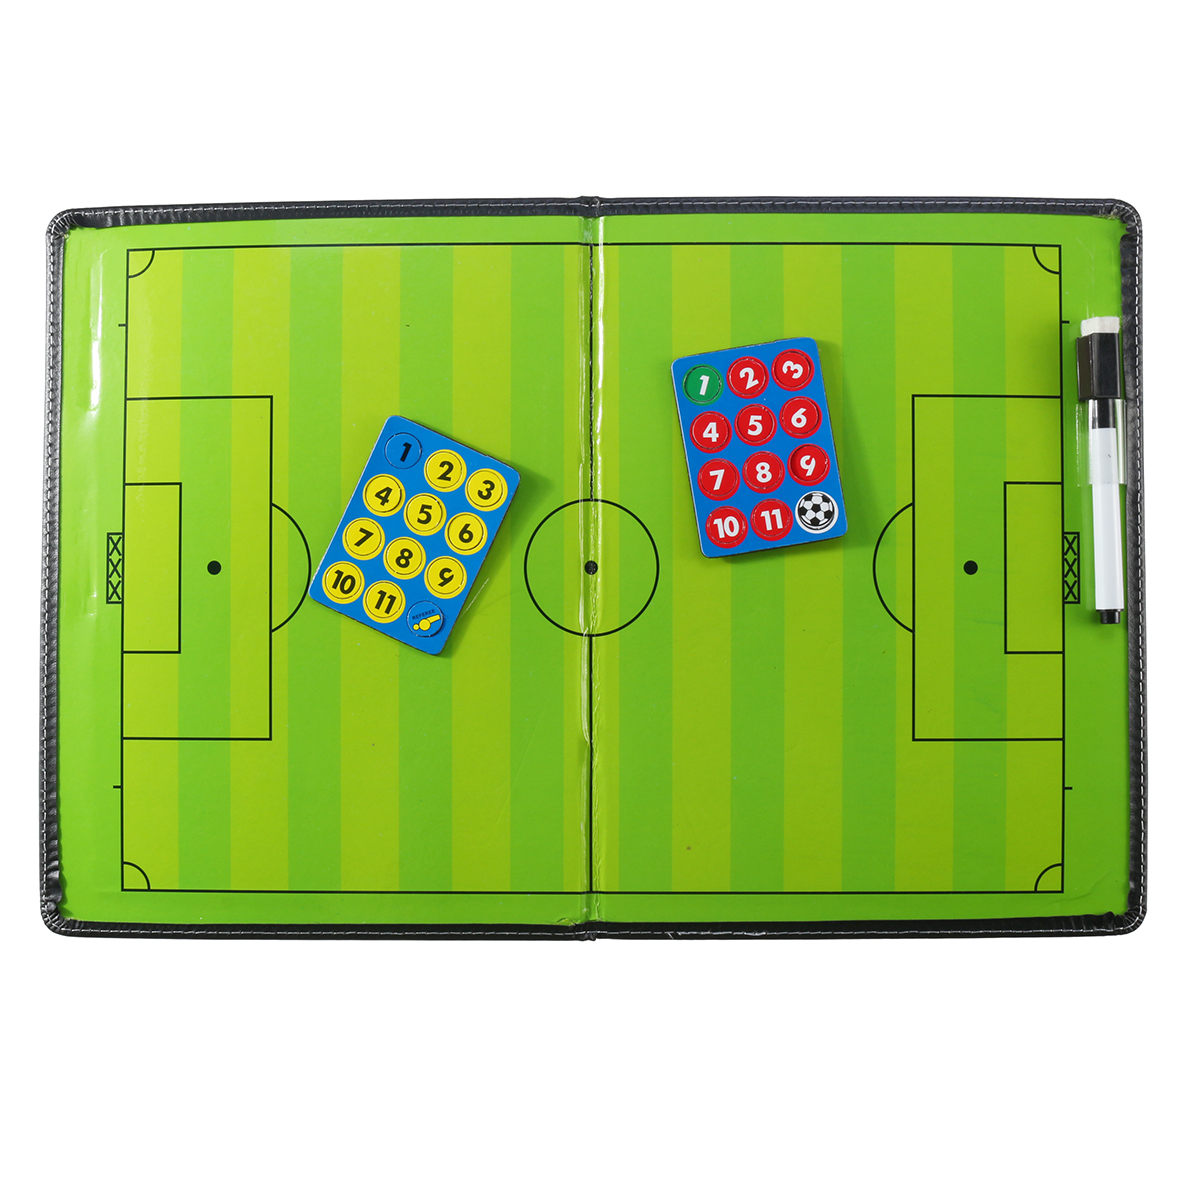 44x32cm-Foldable-Magnetic-Coaching-Training-Board-Tactical-Soccer-Football-Teaching-Kit-1630350-6